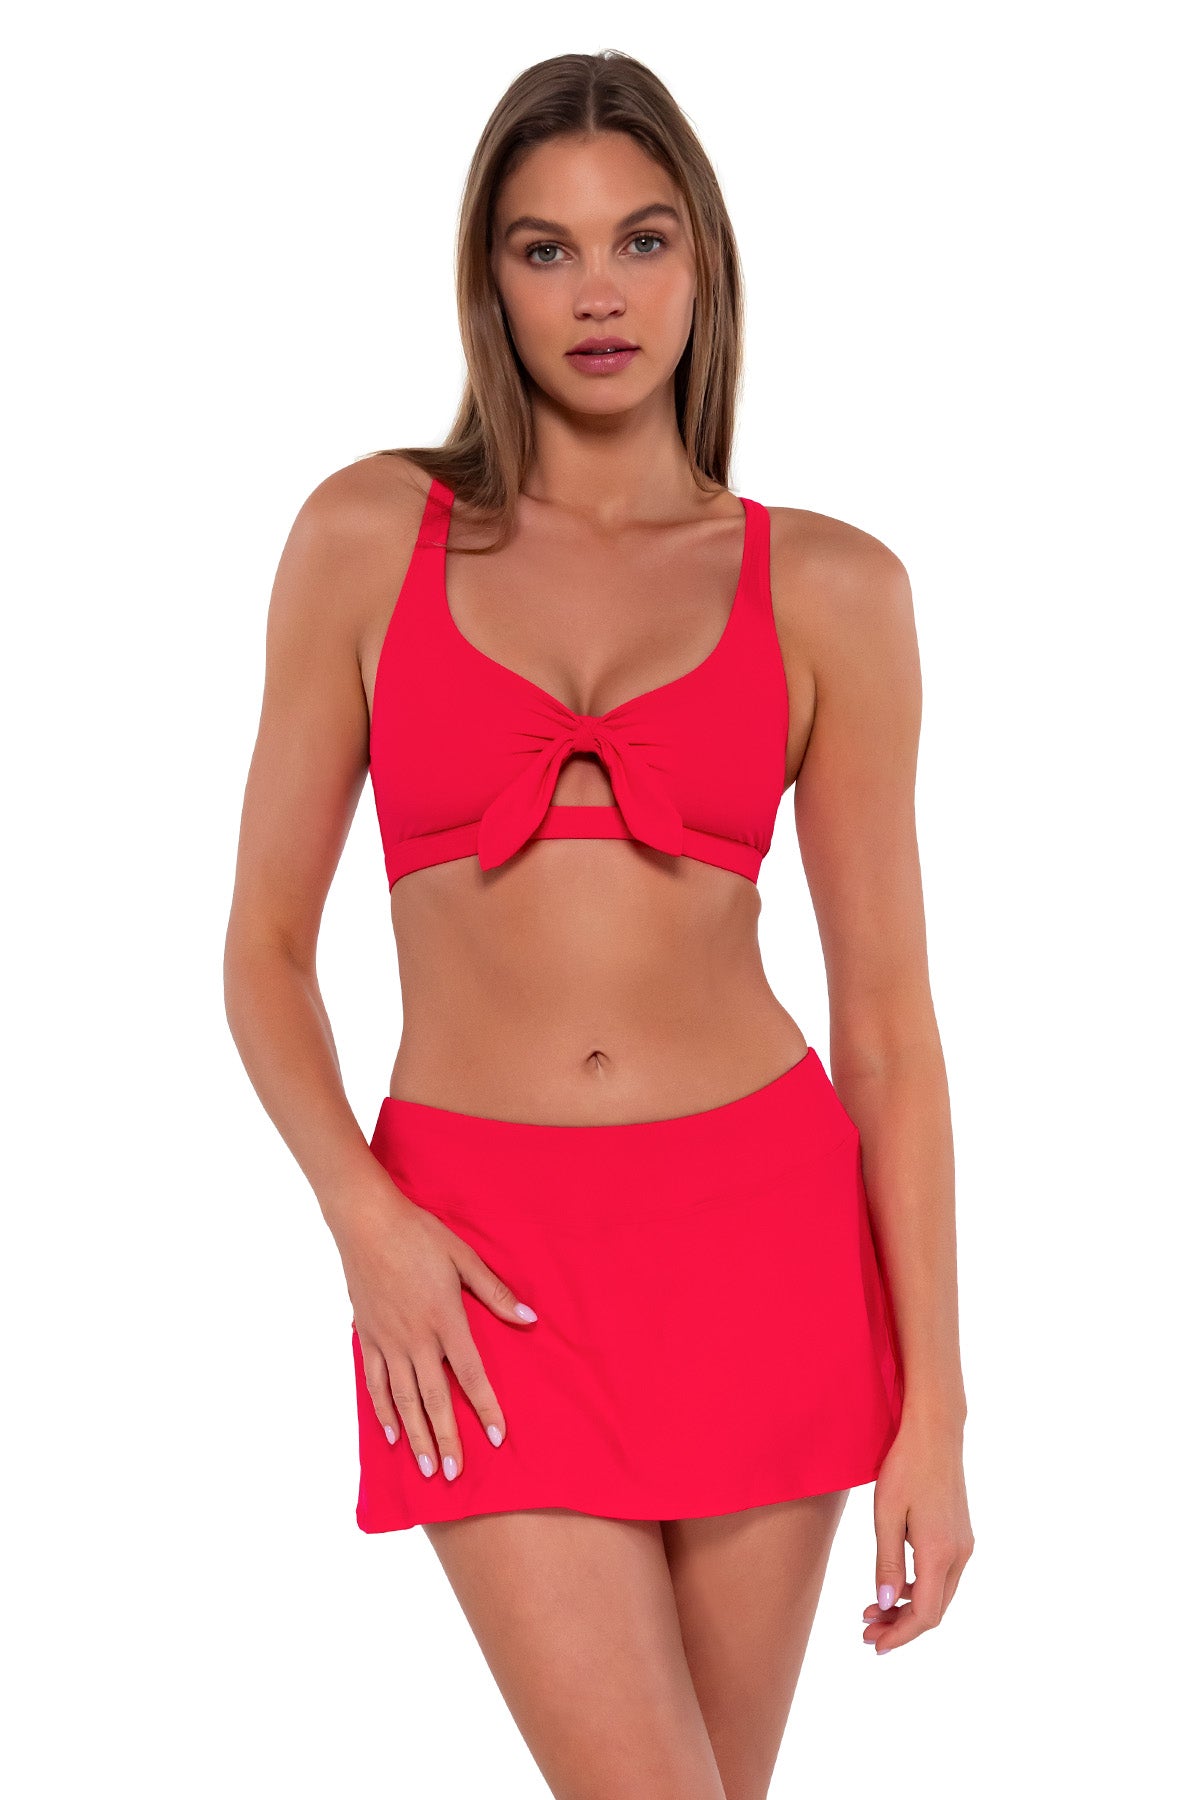 Front Front pose #2 of Daria wearing Sunsets Geranium Sporty Swim Skirt with matching Brandi Bralette bikini top